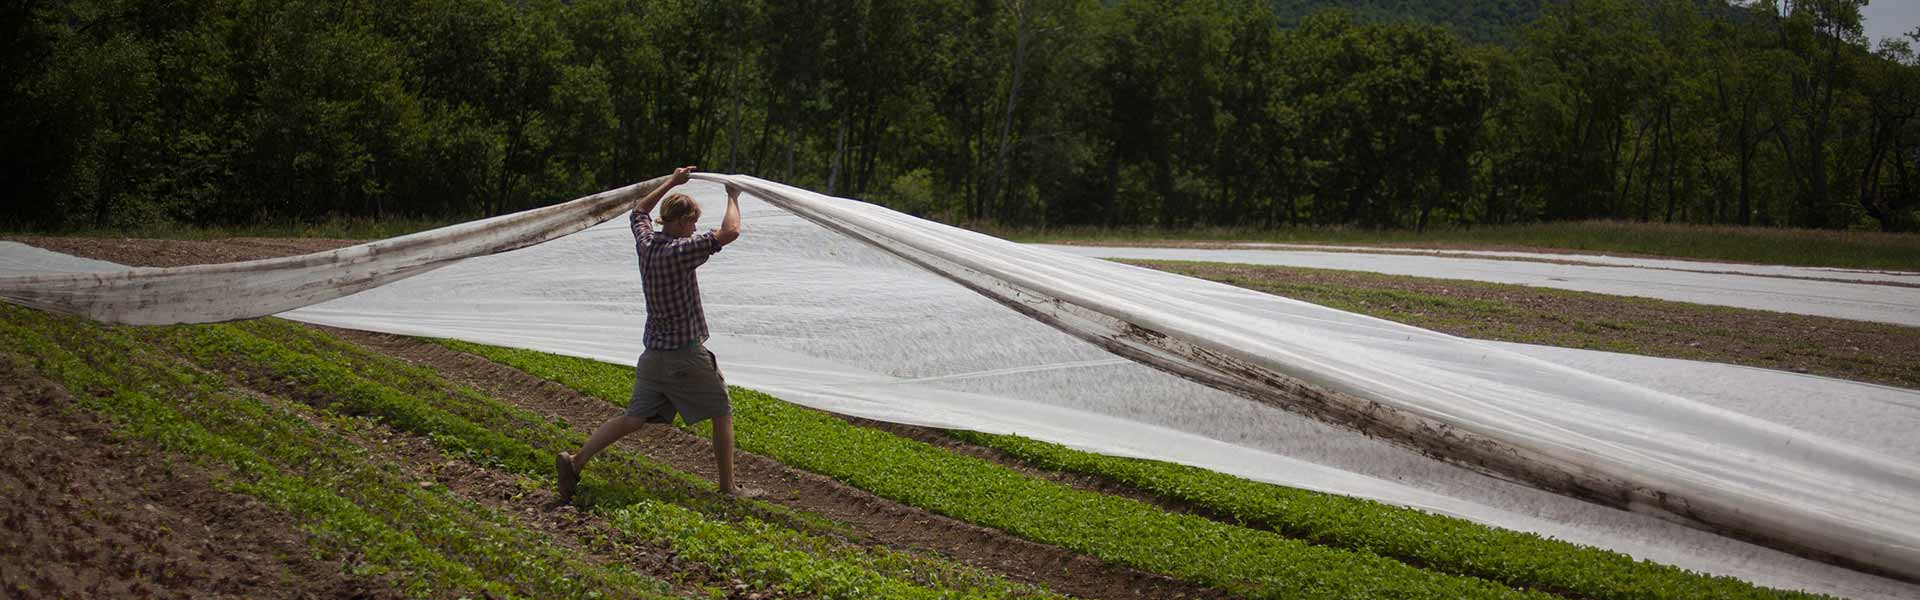 Farmer lifting a large tarp over crops on a farm.